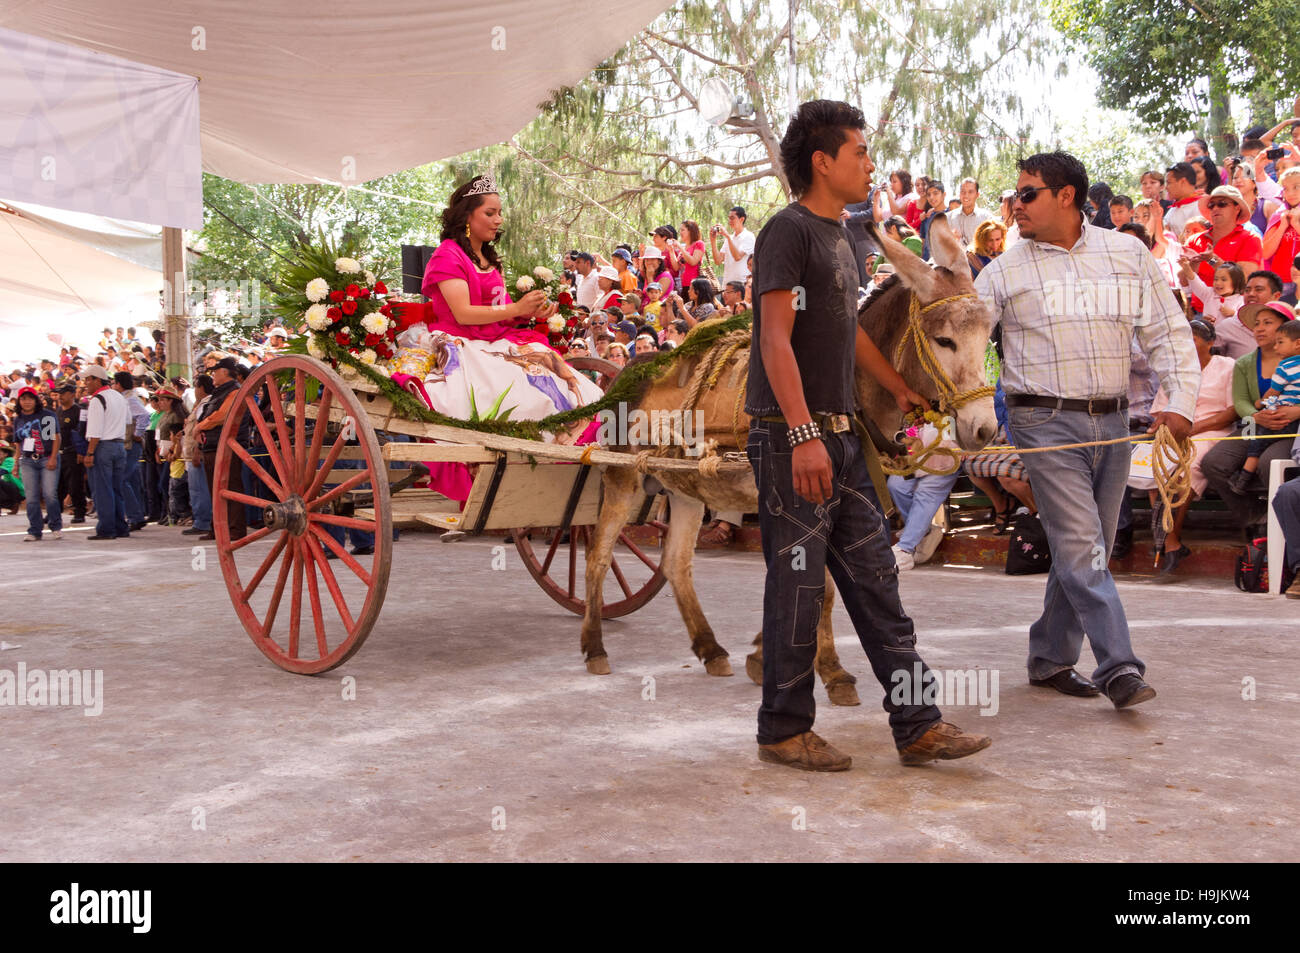 Queen of the Donkey fair (Feria del burro) in Otumba, Mexico Stock Photo